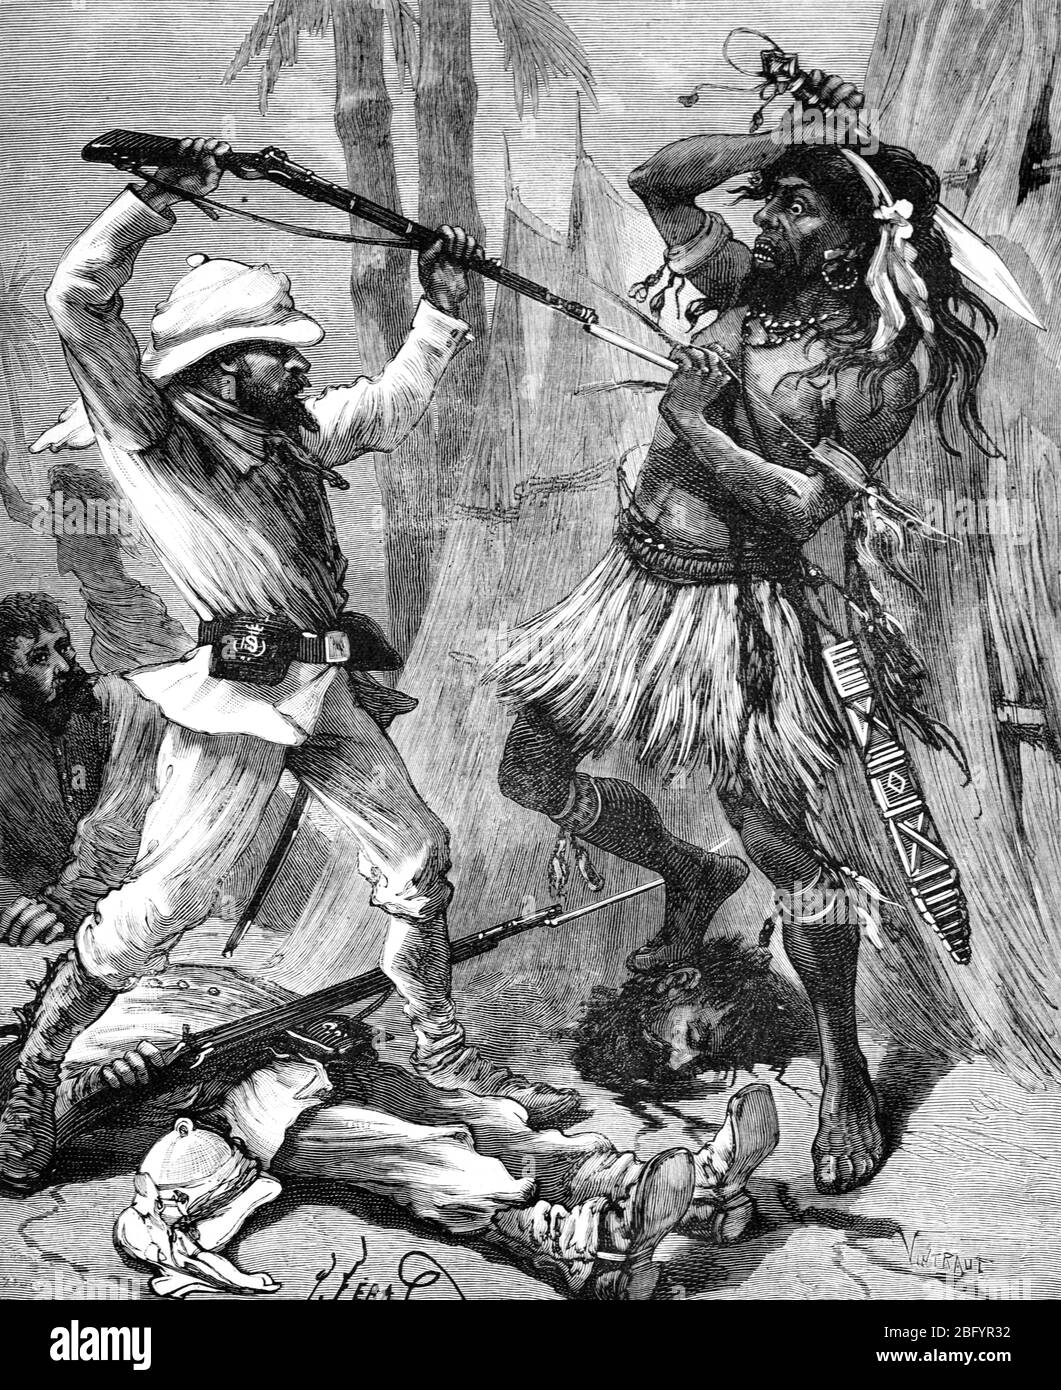 Juramentado Warrior o Moro Swordsman combattono invasore spagnolo a Mindanao o Isole Sulu nelle Filippine meridionali. Vintage o Old Illustration o Engraving 1889 Foto Stock